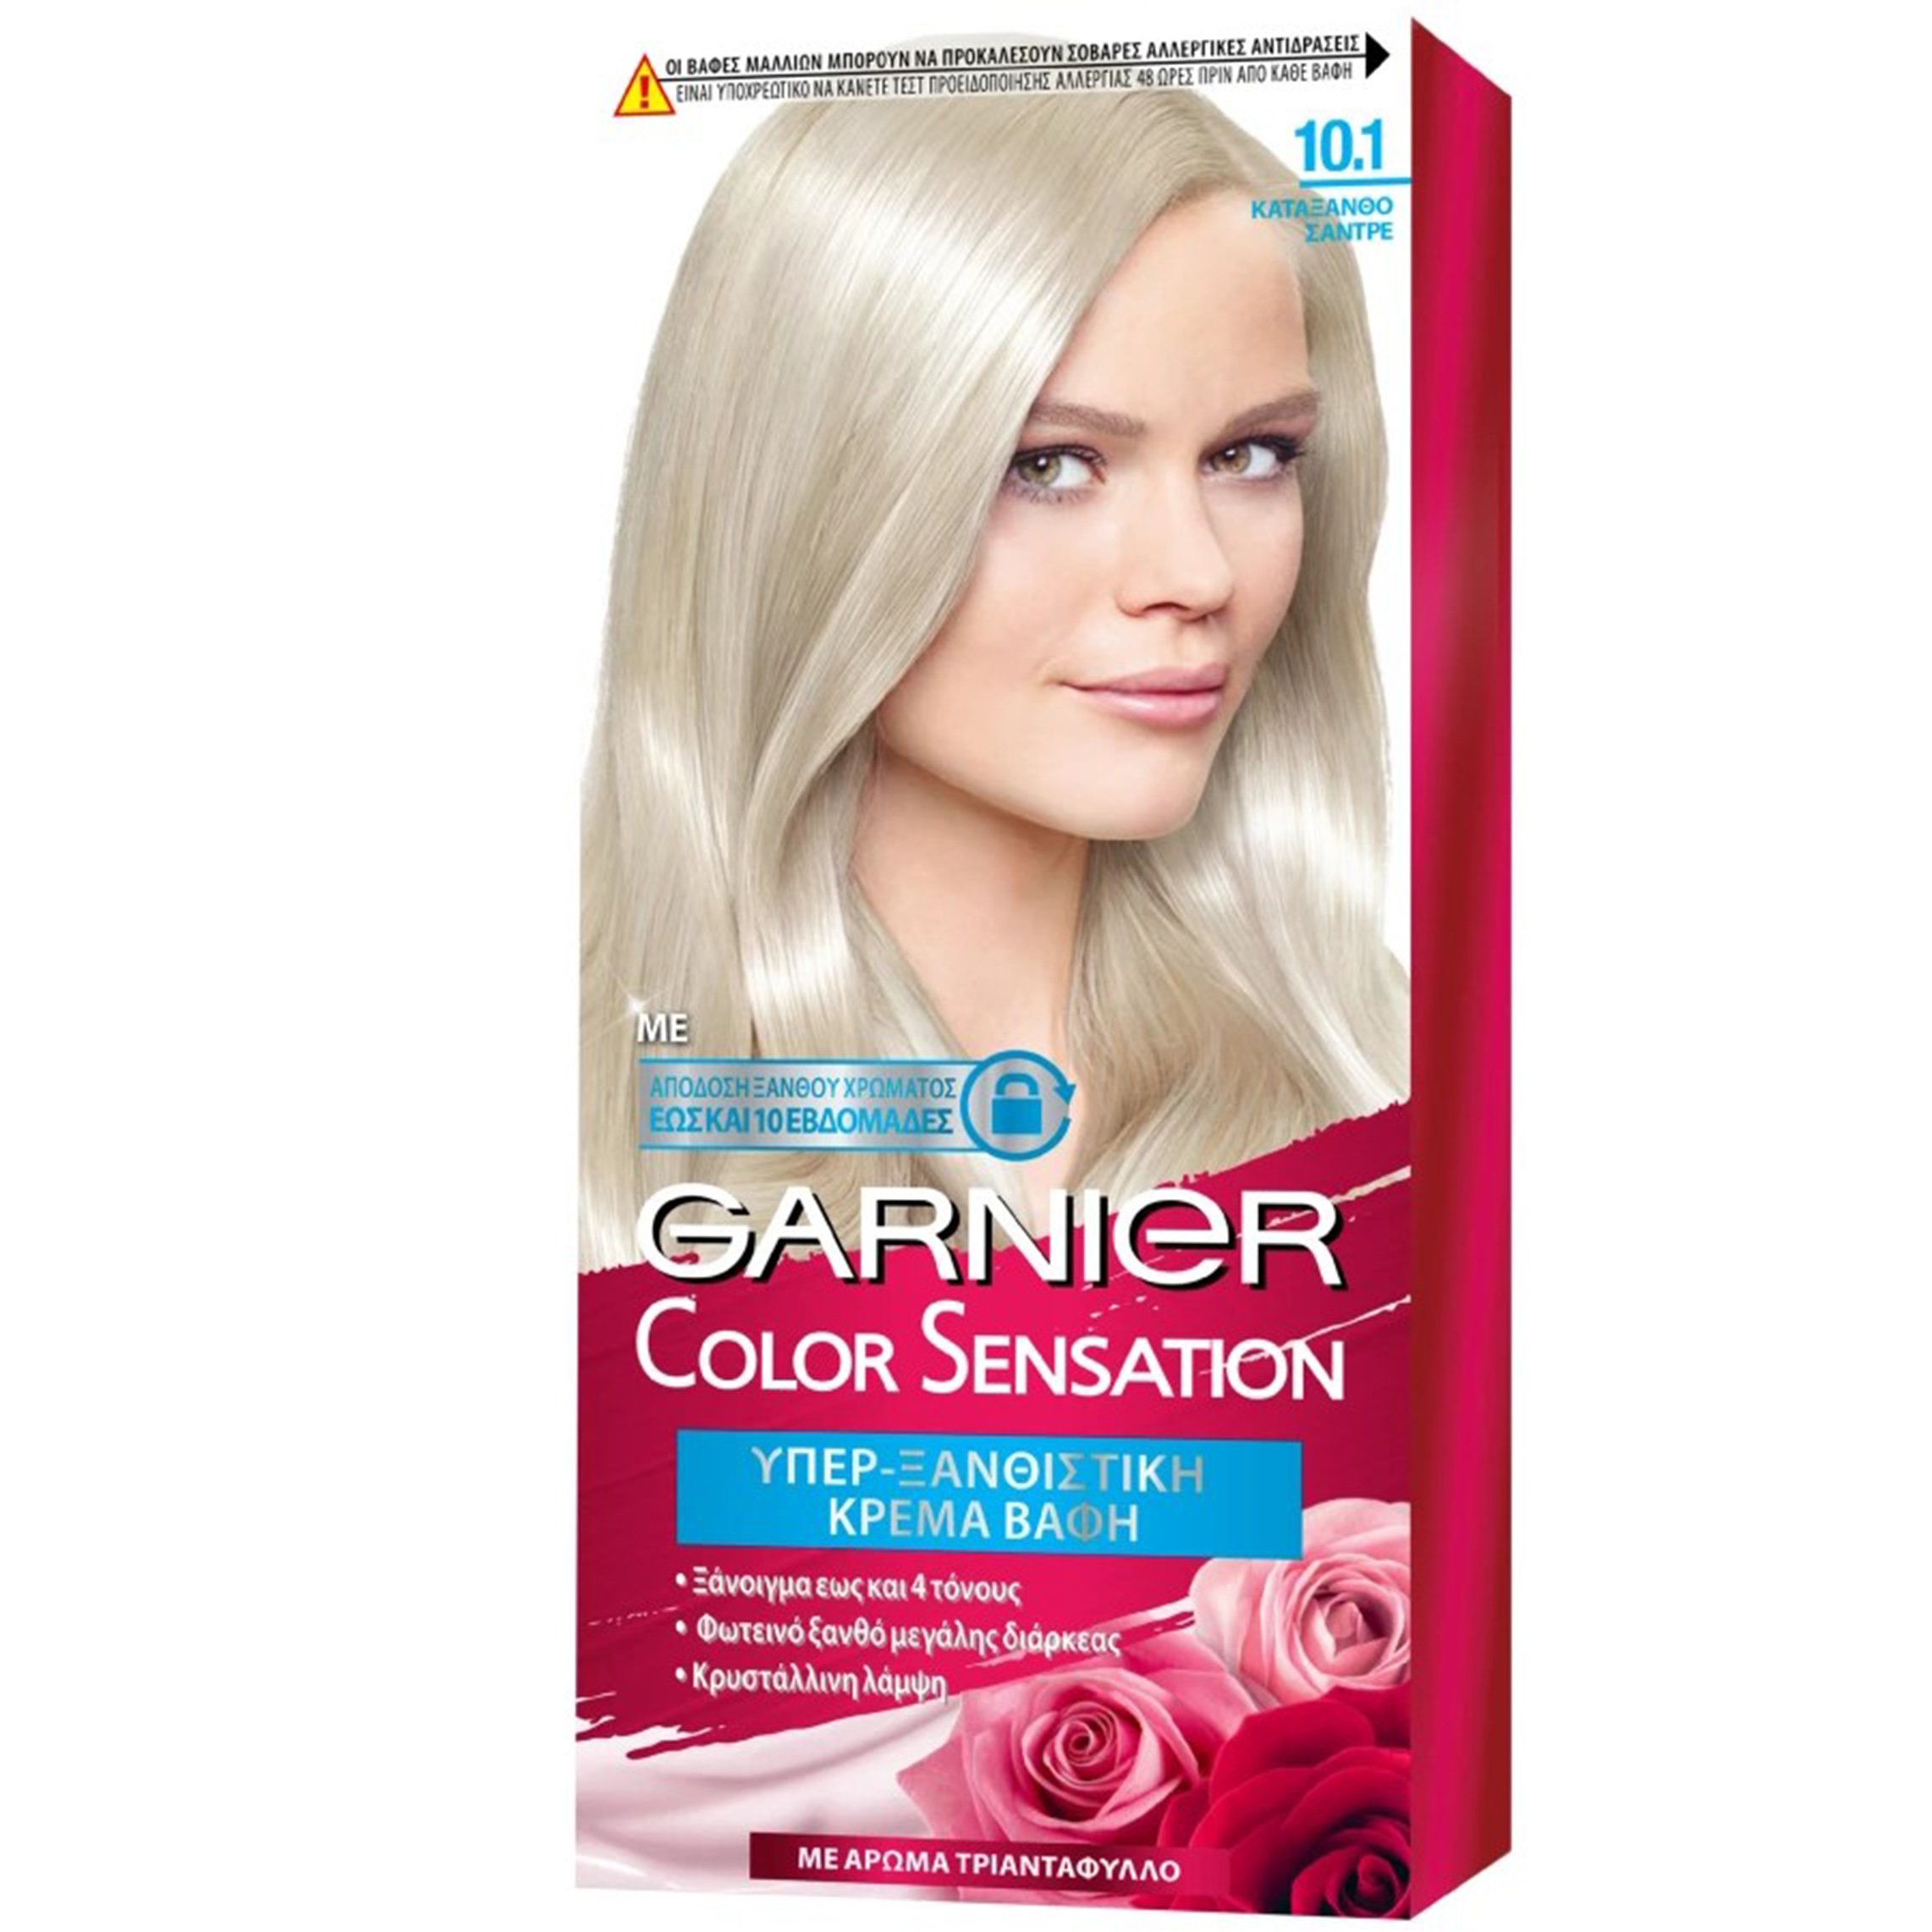 Garnier Color Sensation Permanent Hair Color Kit Μόνιμη Κρέμα Βαφή Μαλλιών με Άρωμα Τριαντάφυλλο 1 Τεμάχιο – 10.1 Κατάξανθο Σαντρέ